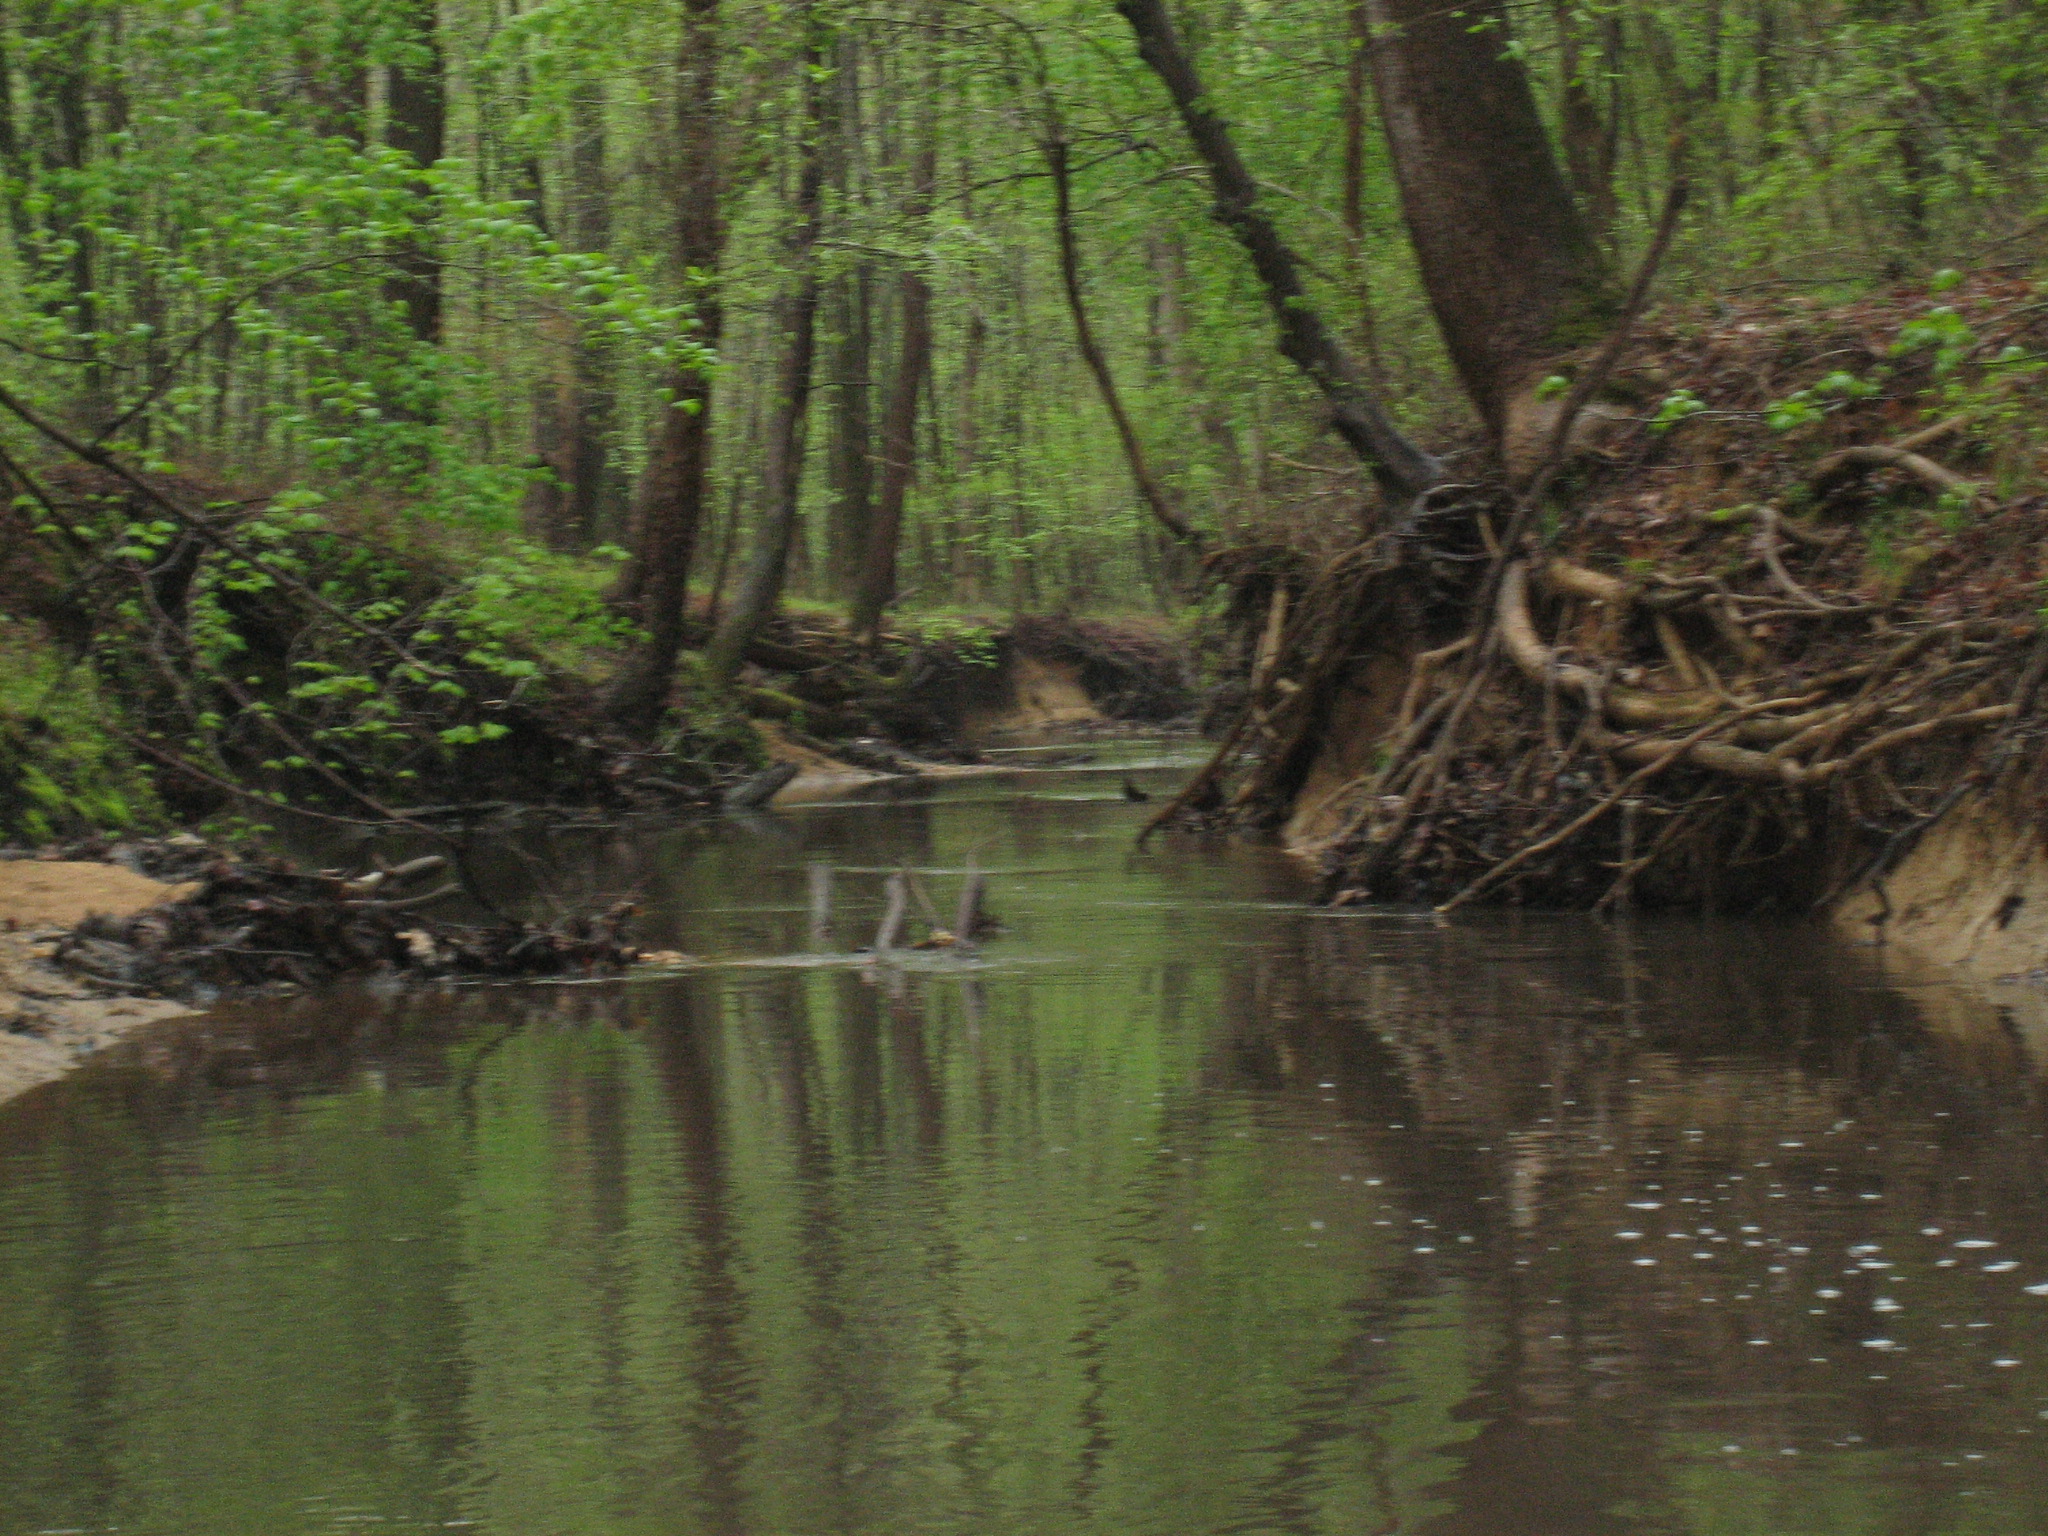 Image of Still Creek running through the trees at Greenbelt Park.